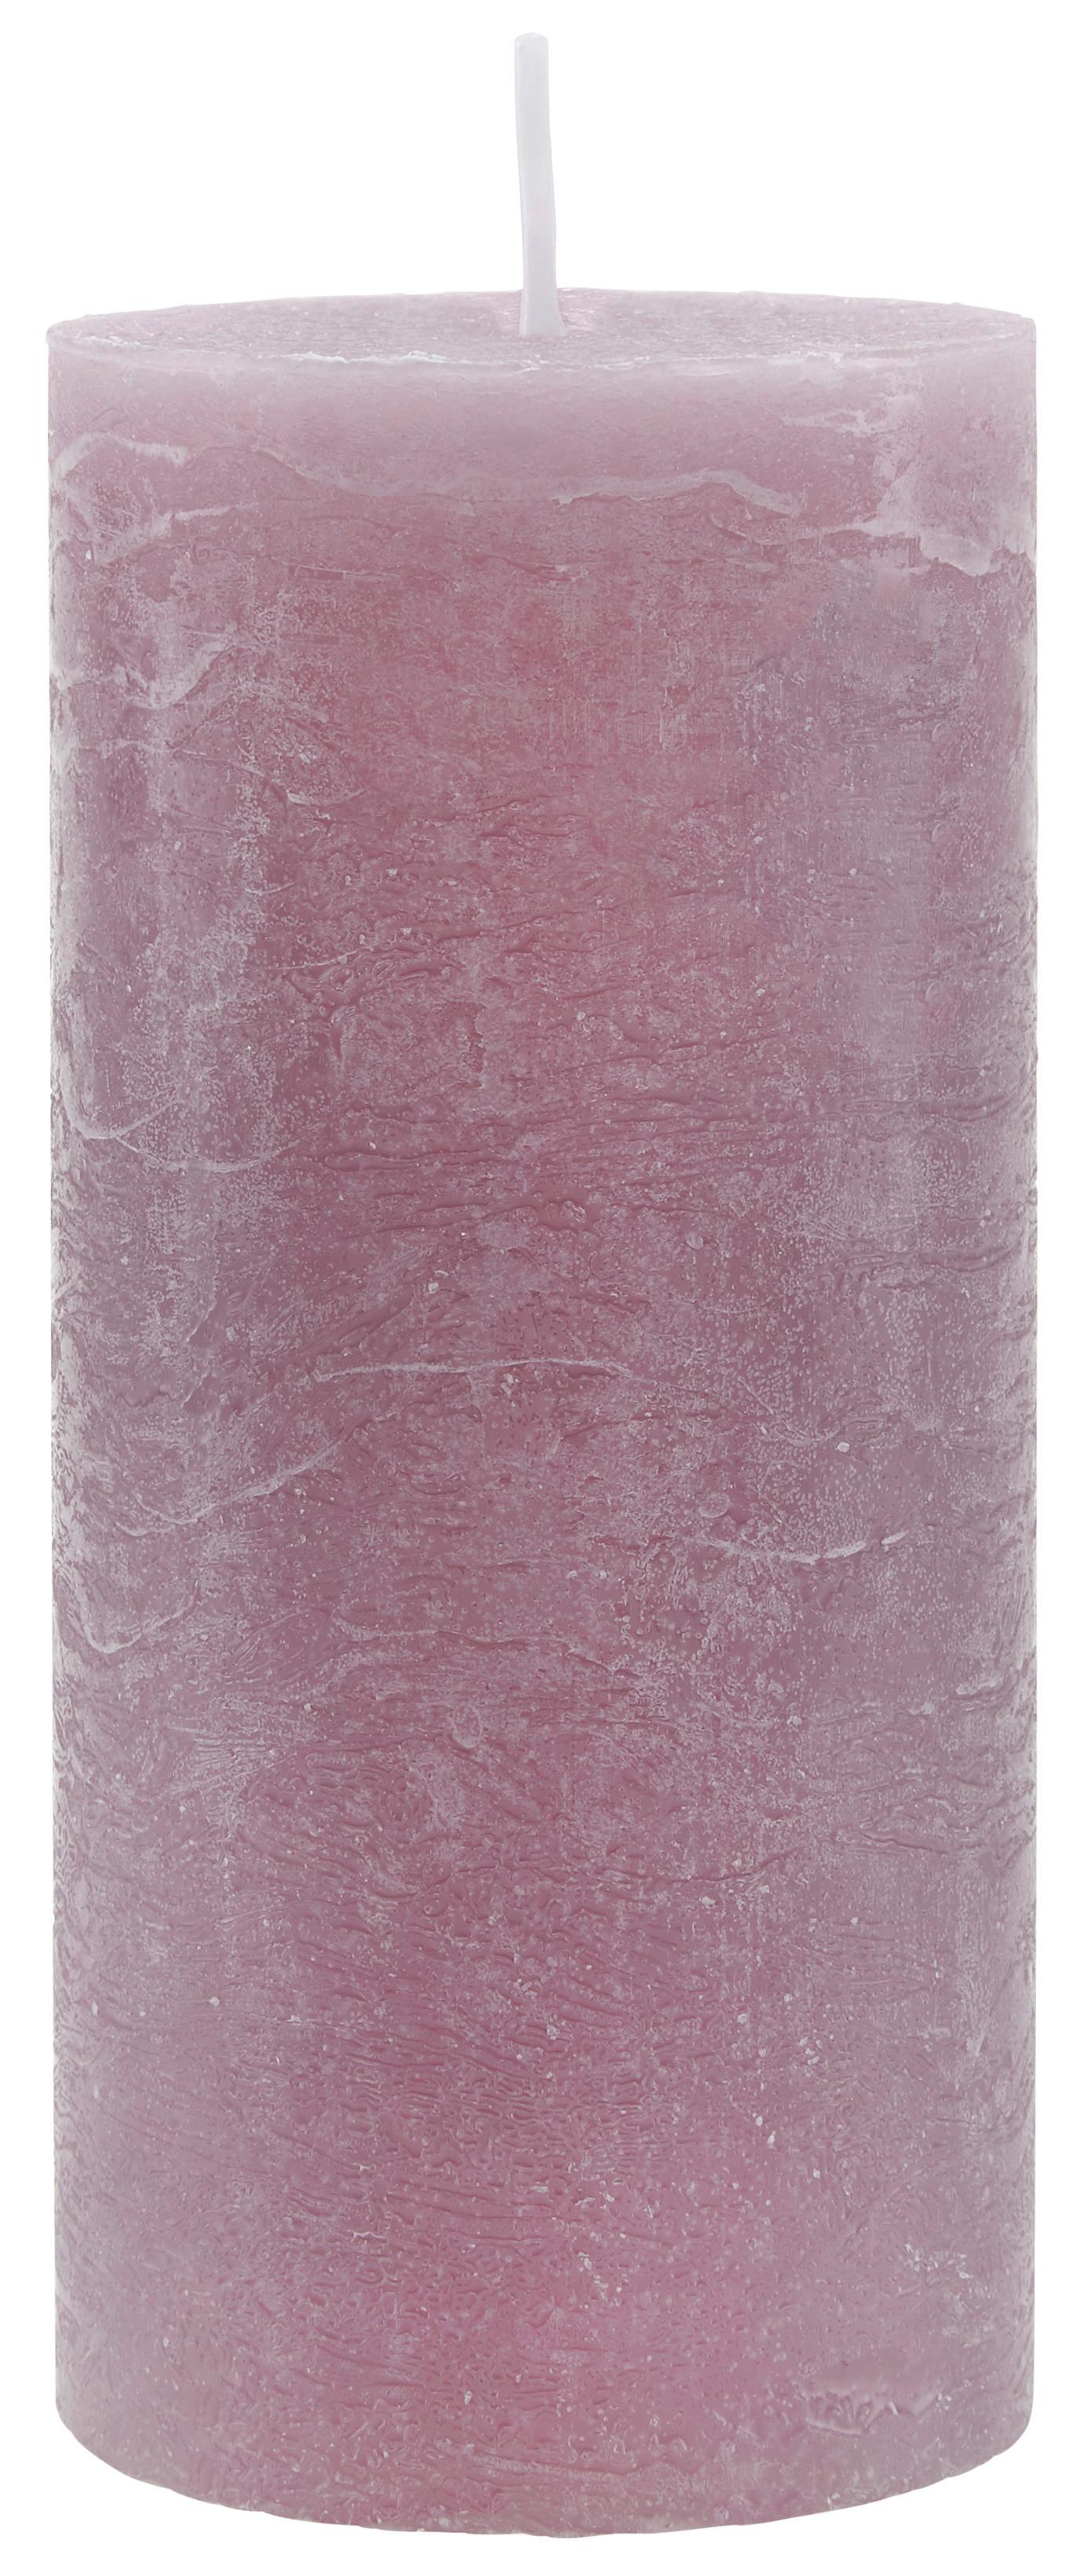 Válcová Svíčka Lia - purpurová, Moderní (6,8/15cm) - Premium Living